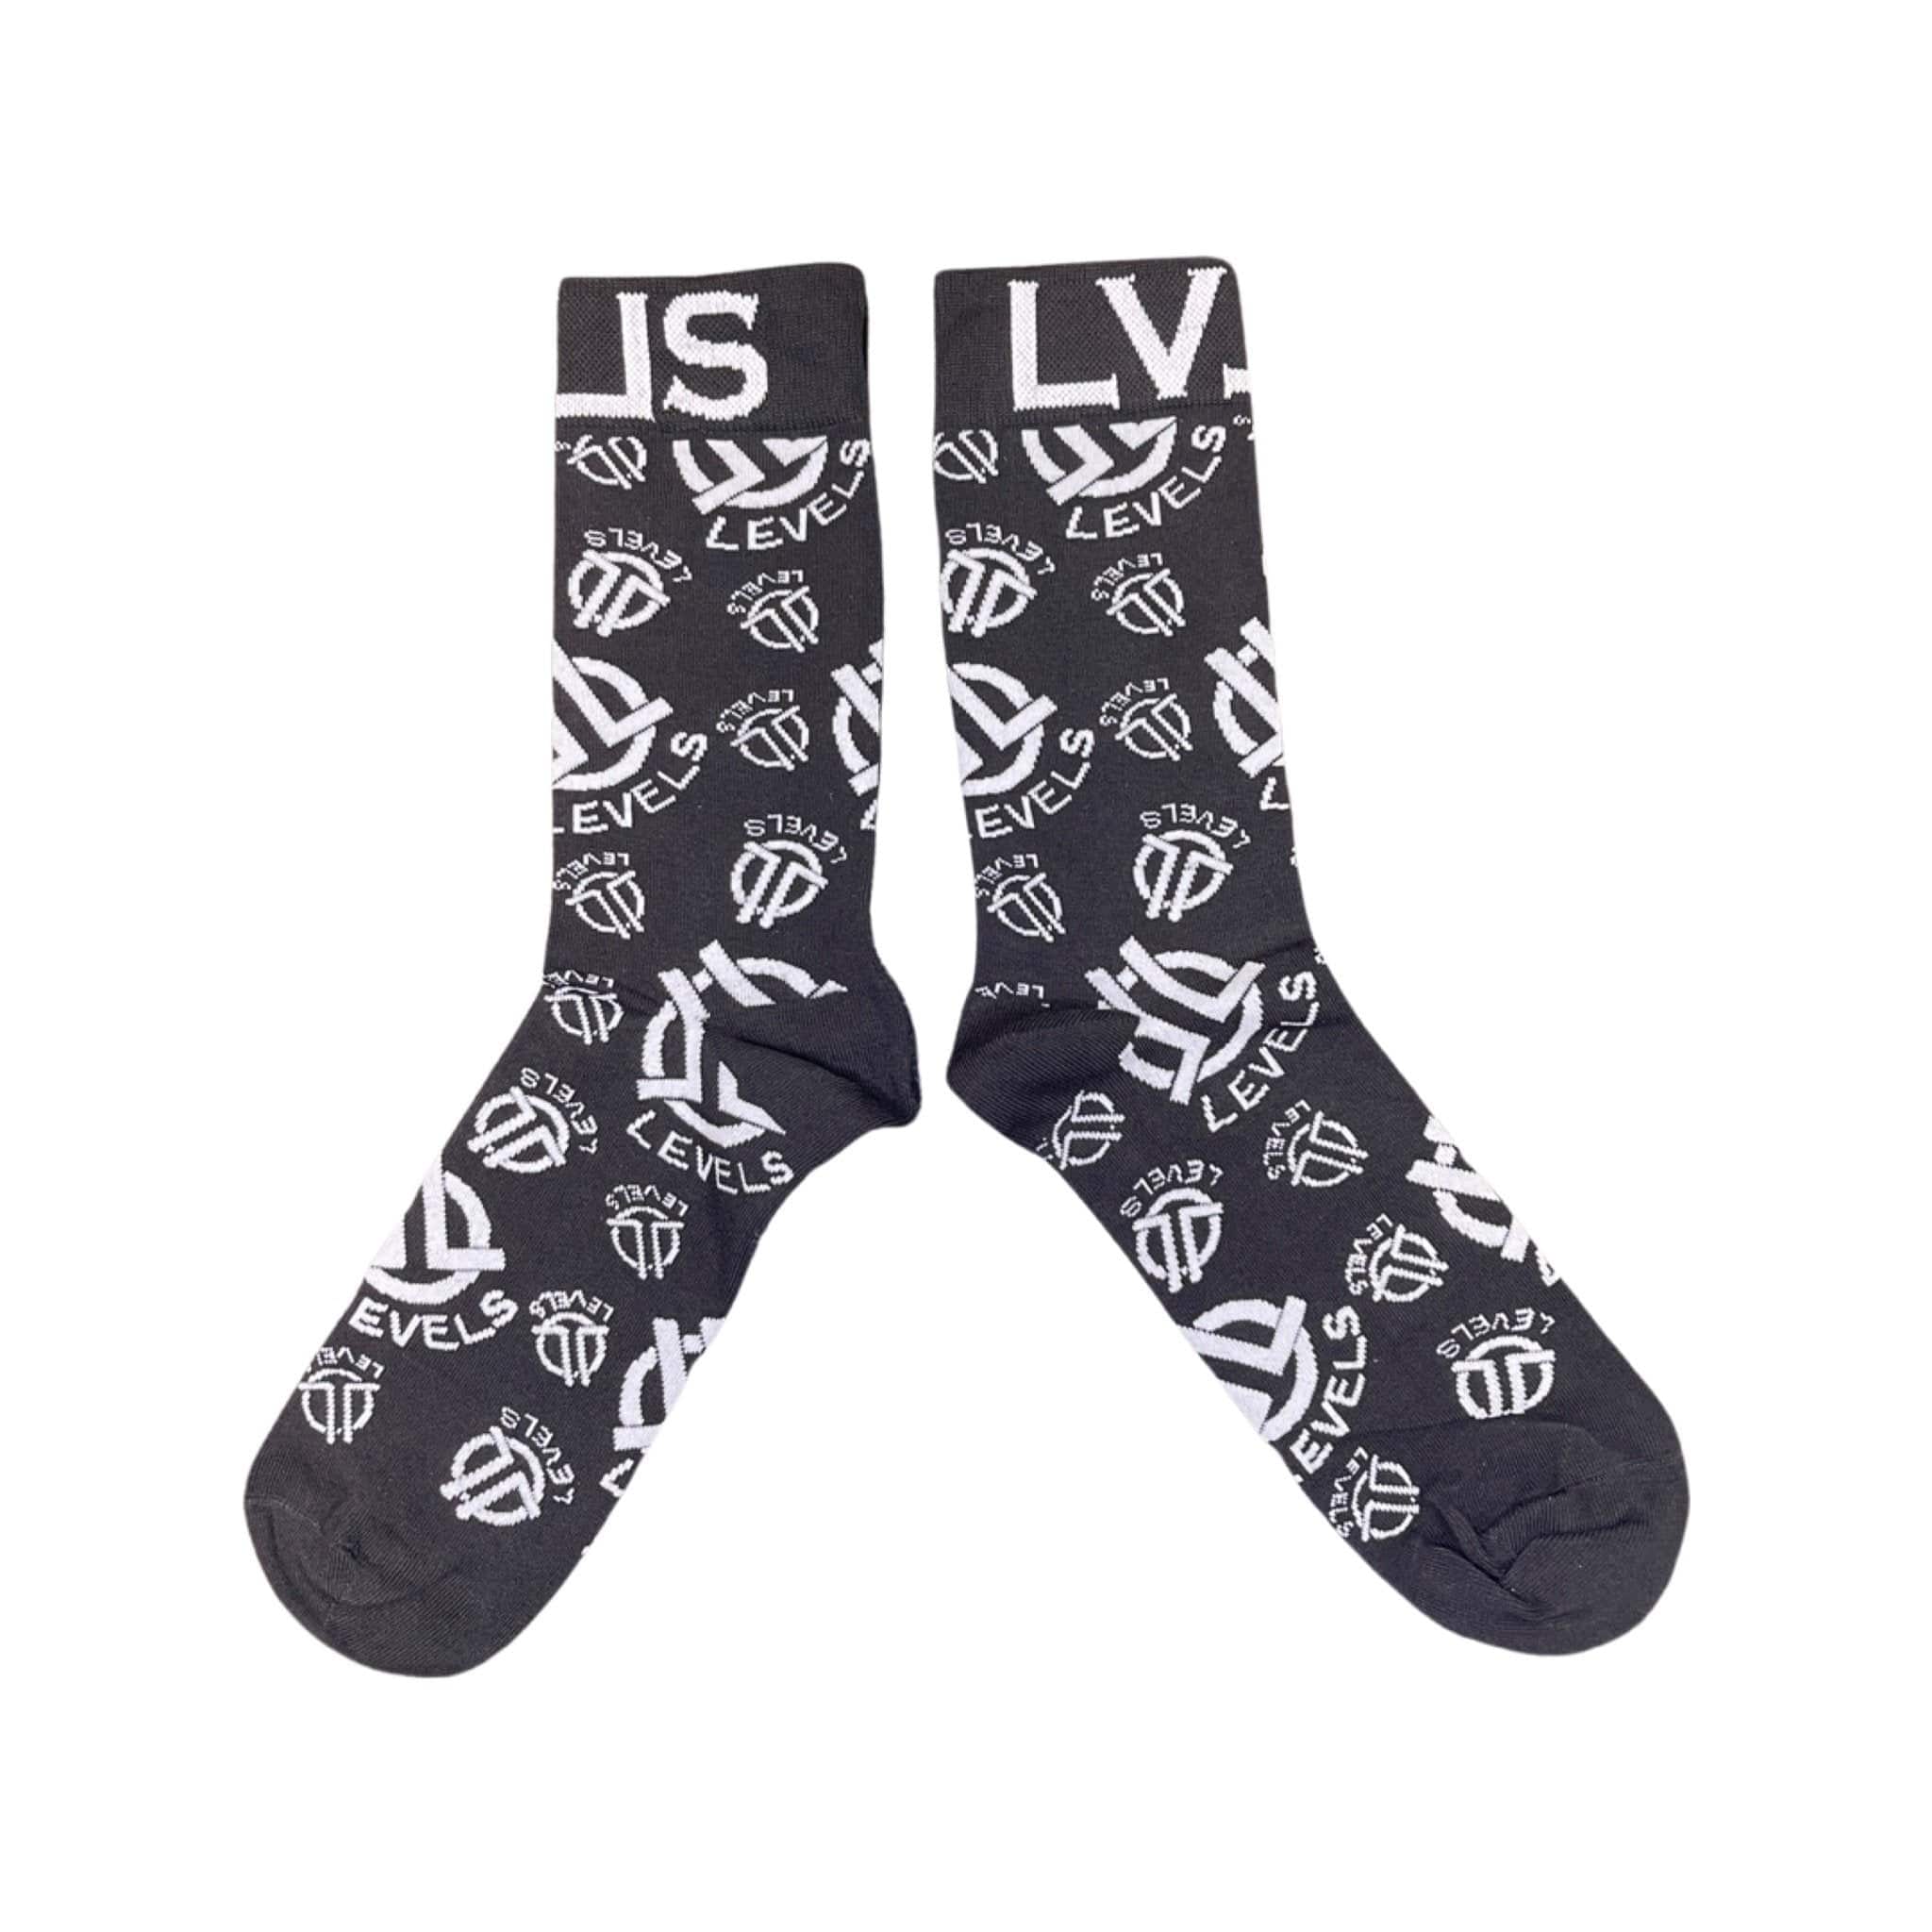 LVLS House of Hoodies, LLC Socks LVLS Black LVLS Socks (Black)